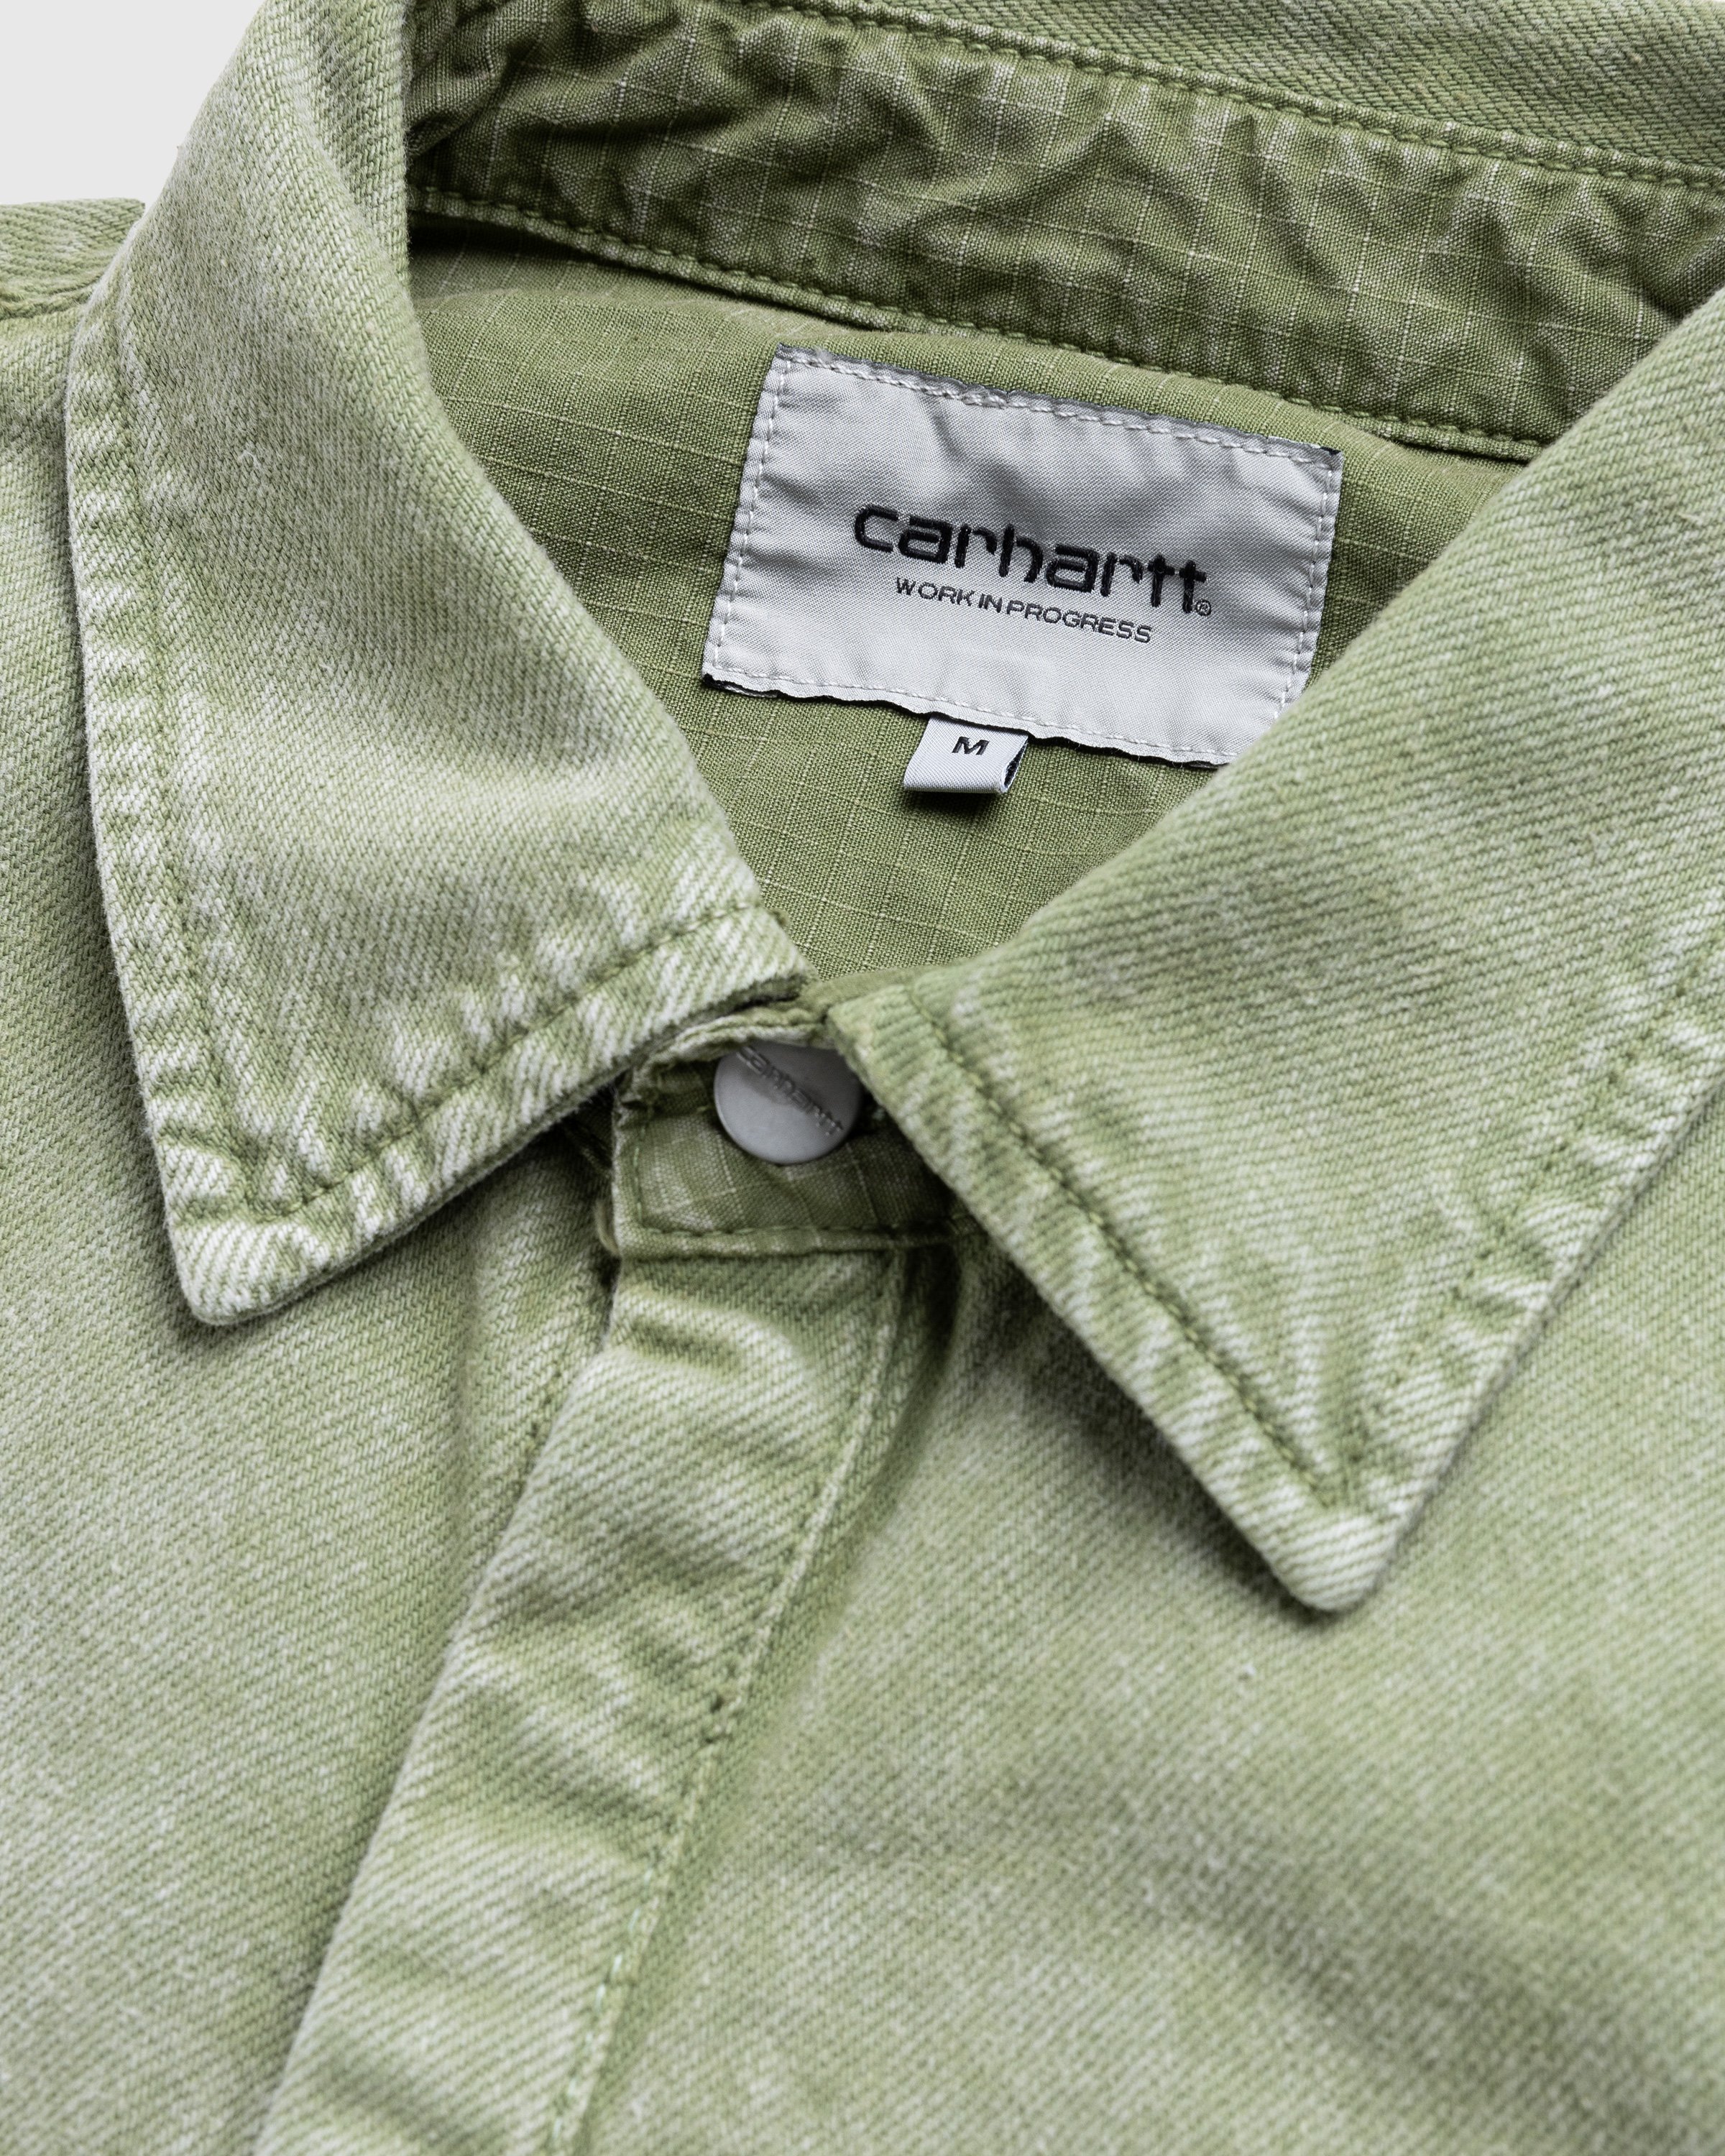 Carhartt WIP - Monterey Shirt Jacket Worn-Washed Kiwi Green - Clothing - Green - Image 5